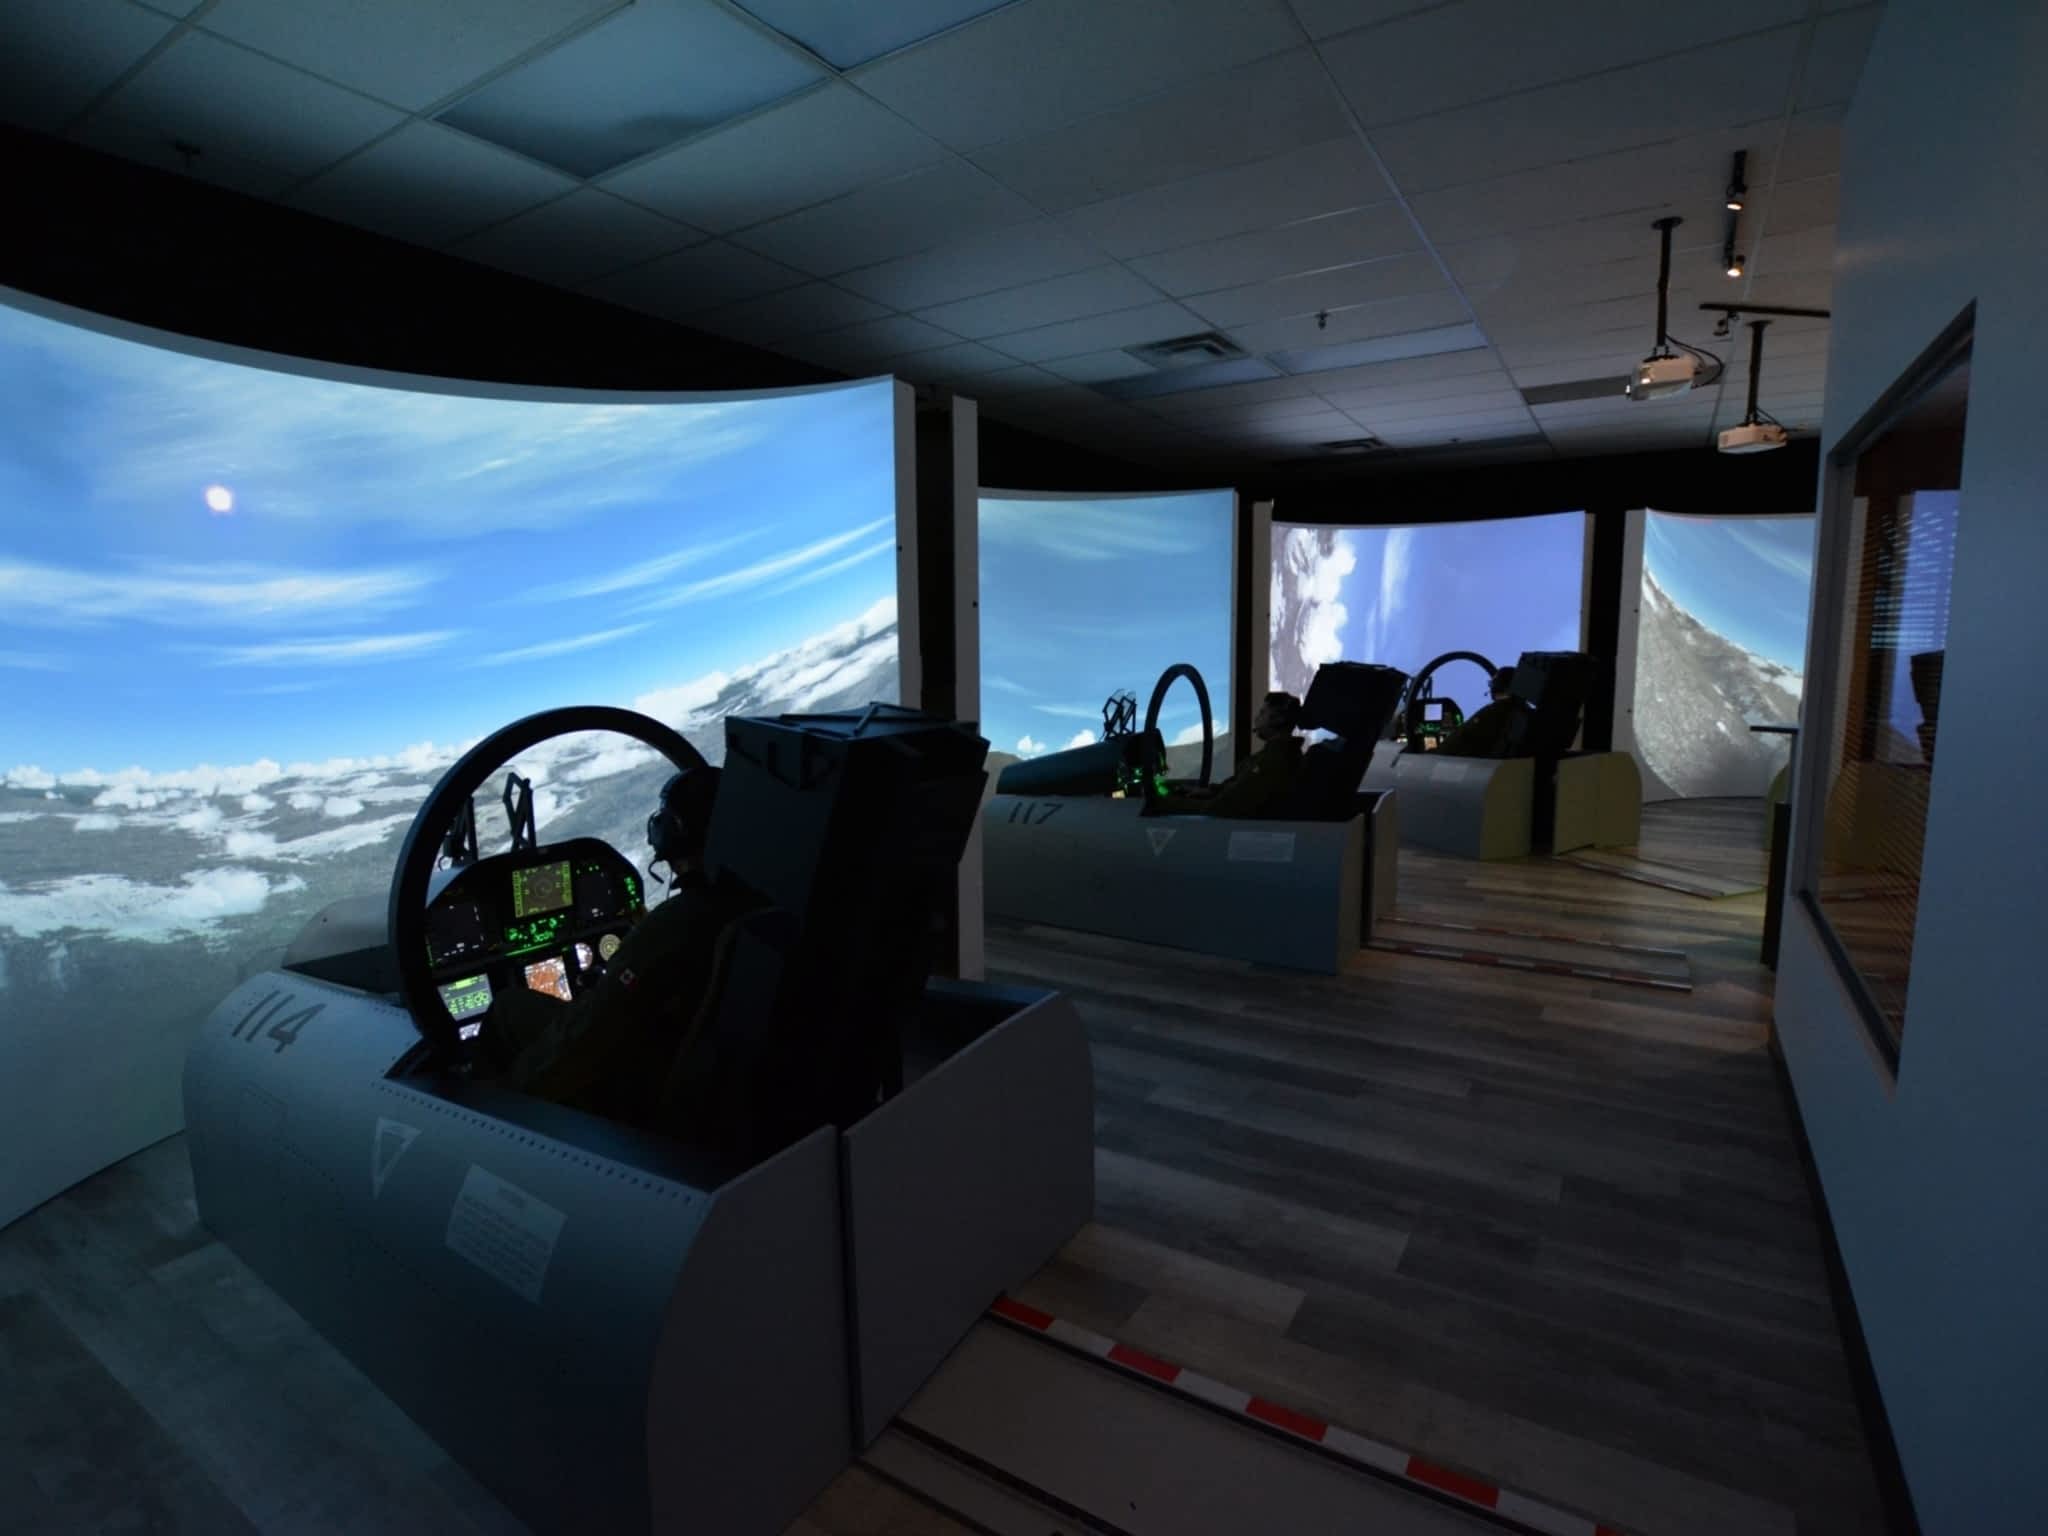 photo Altitude Flight Simulation